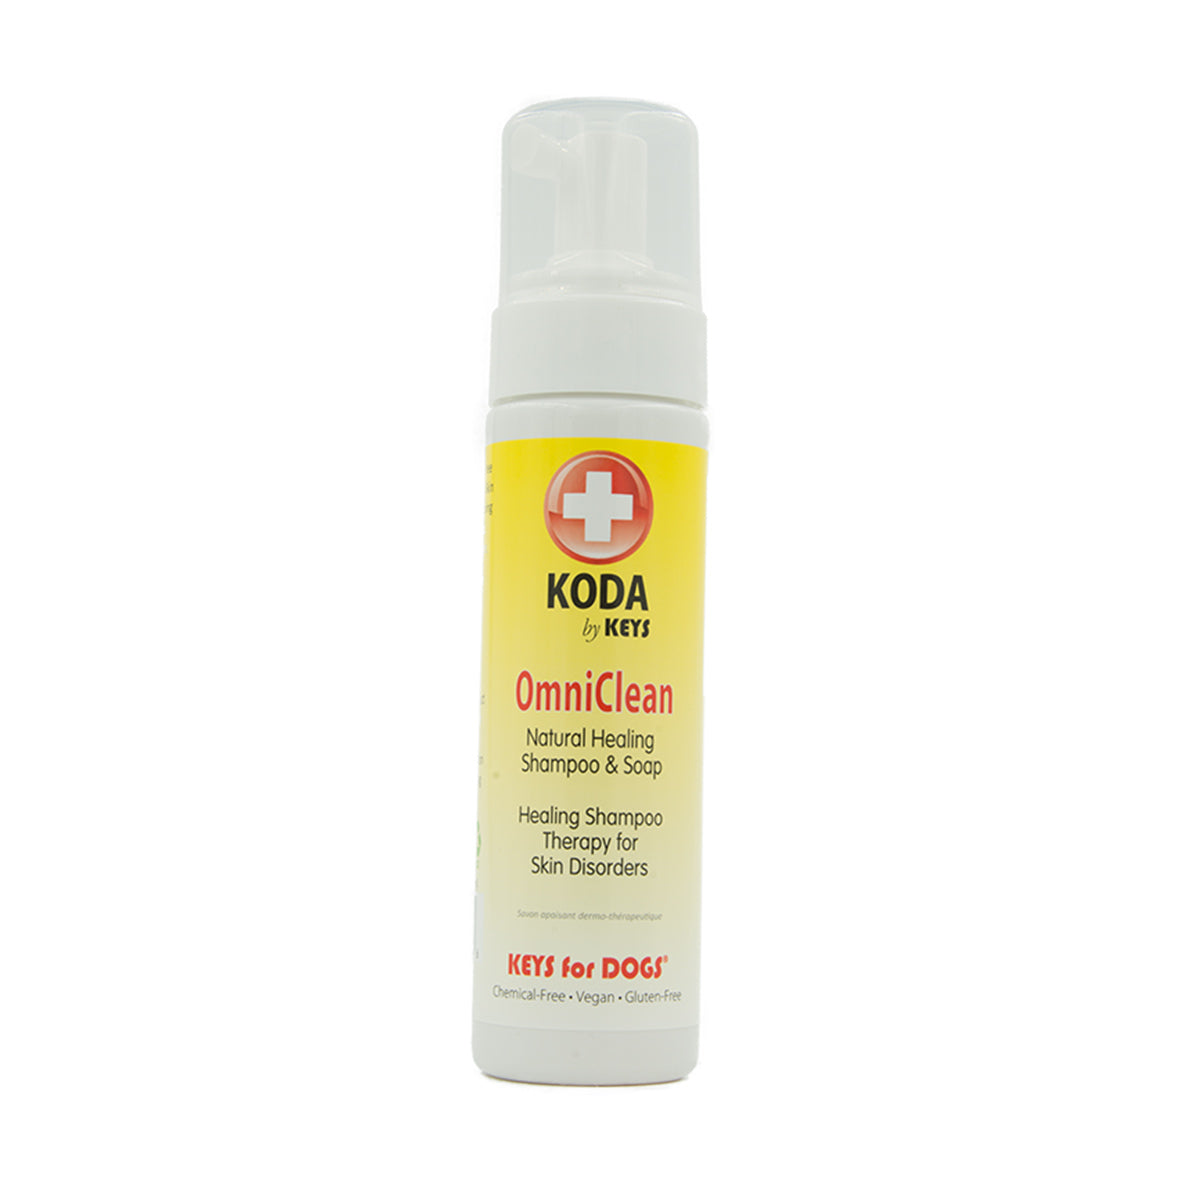 Primary image of Koda OmniClean Foaming Dog Shampoo